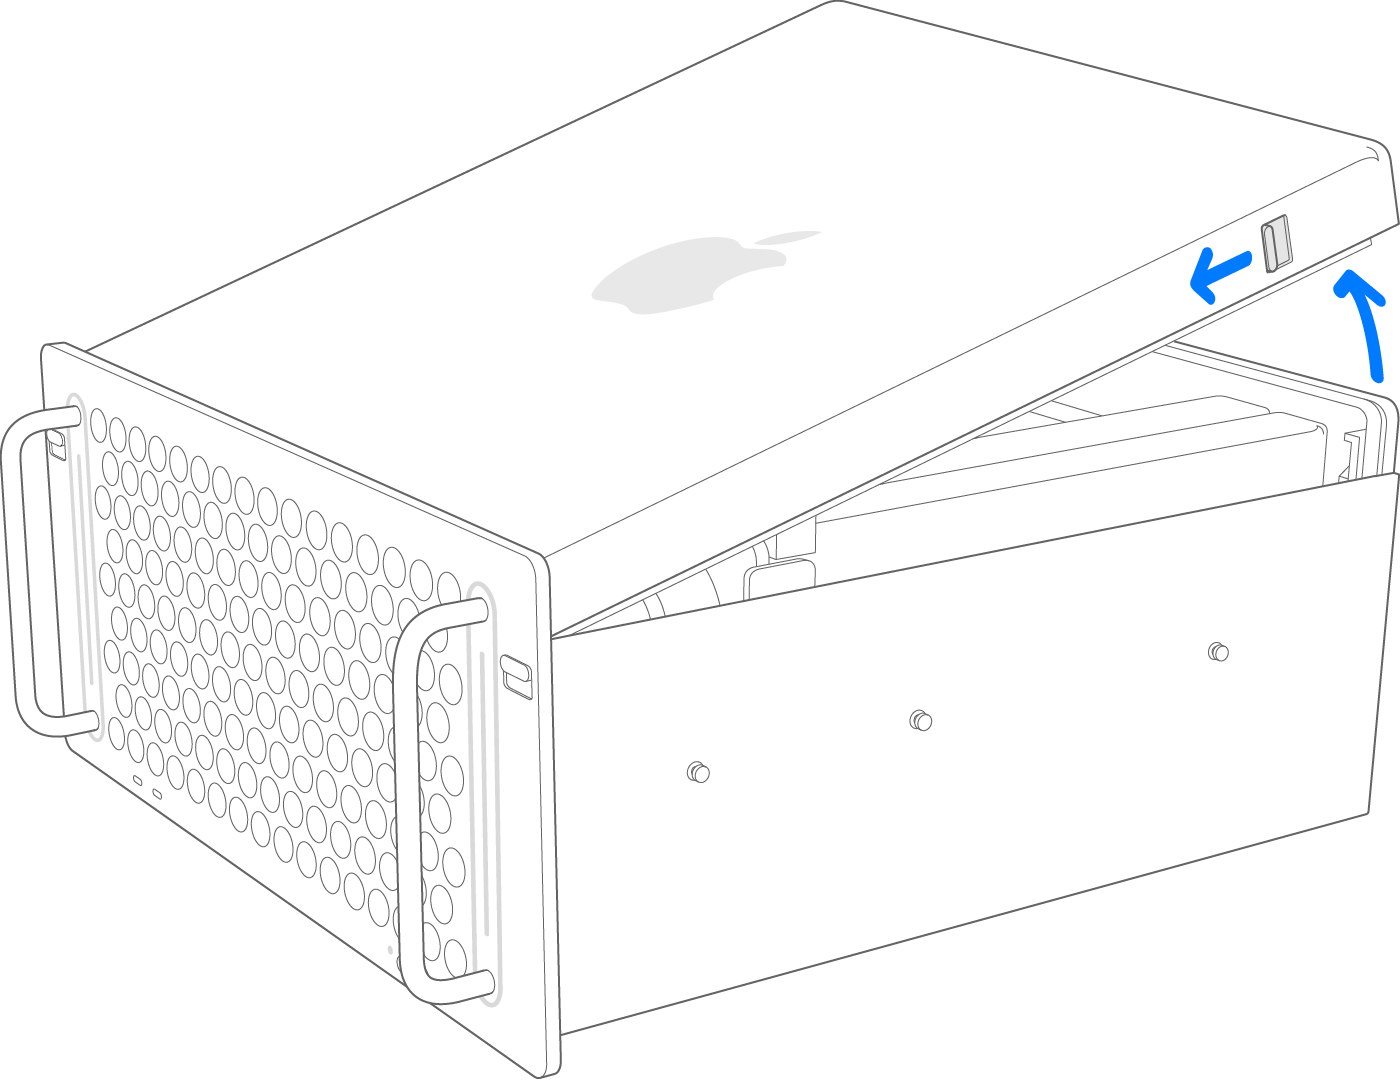 ‎2019-mac-pro-diagram-rack-remove-top-cover